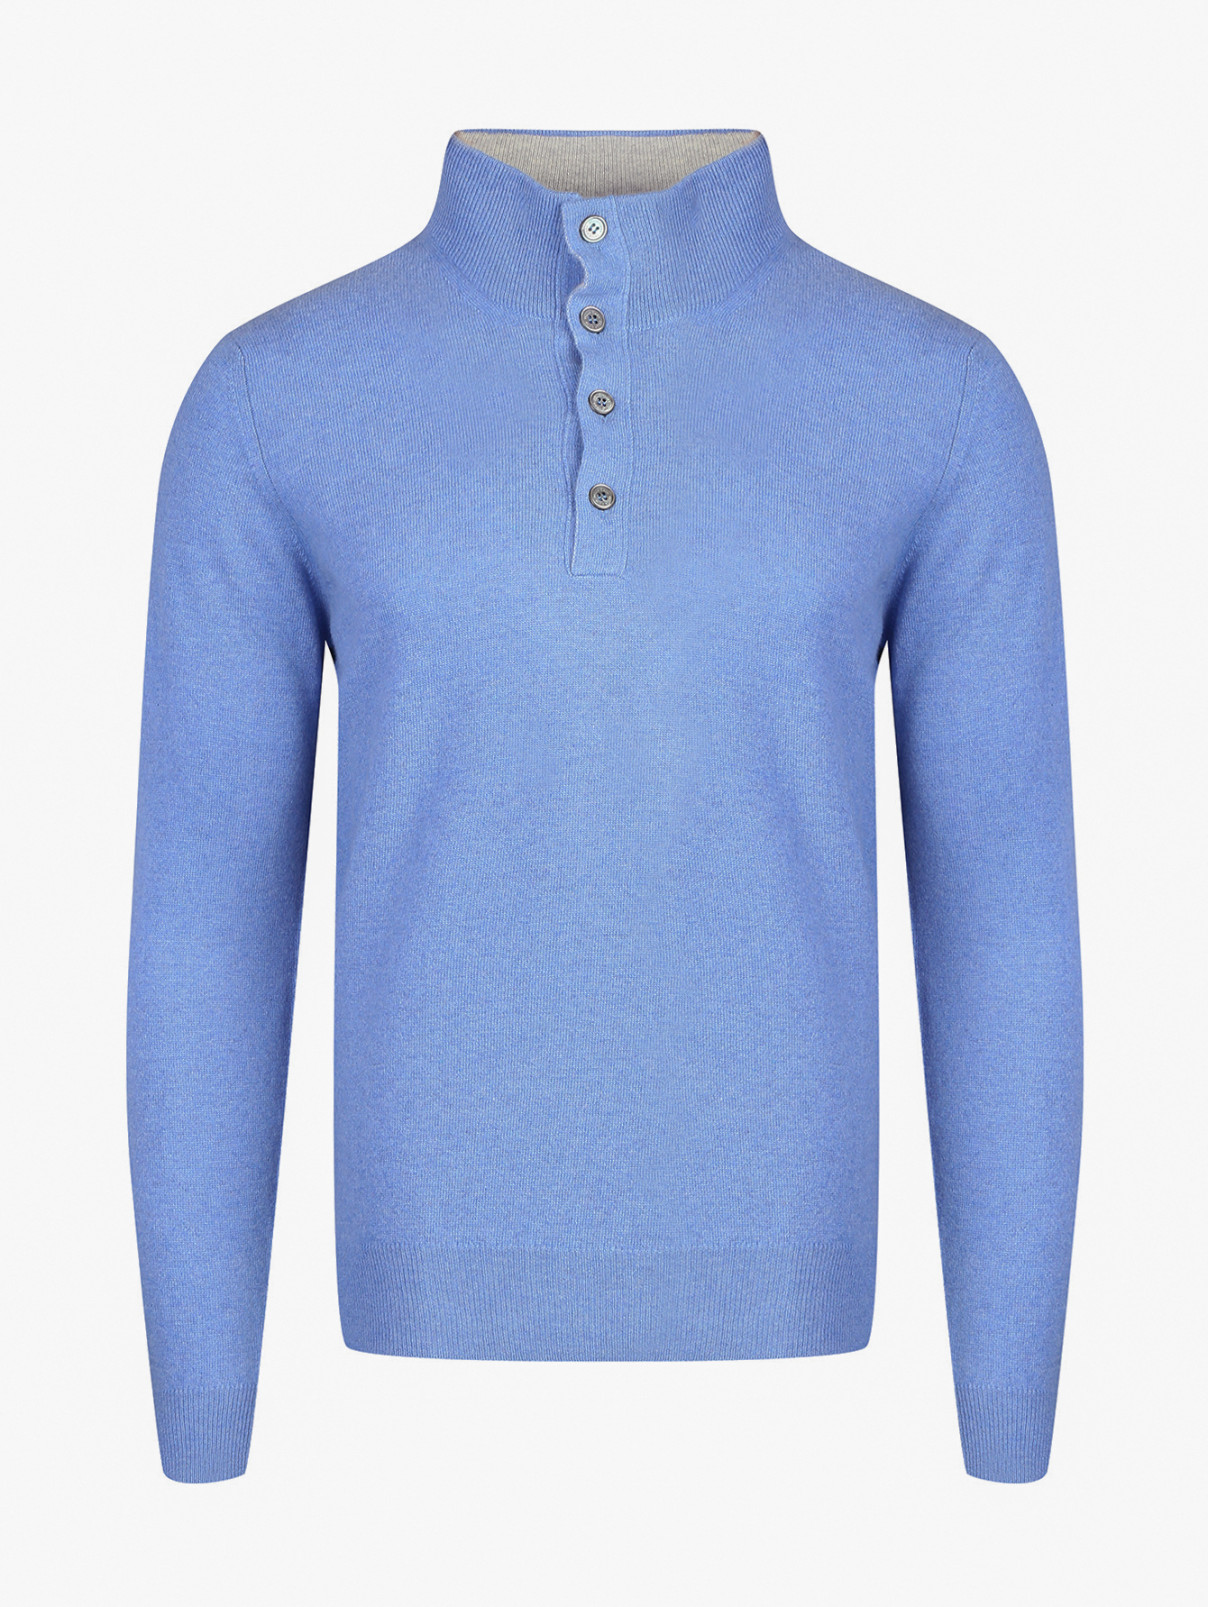 Джемпер из шерсти на пуговицах Della Ciana  –  Общий вид  – Цвет:  Синий